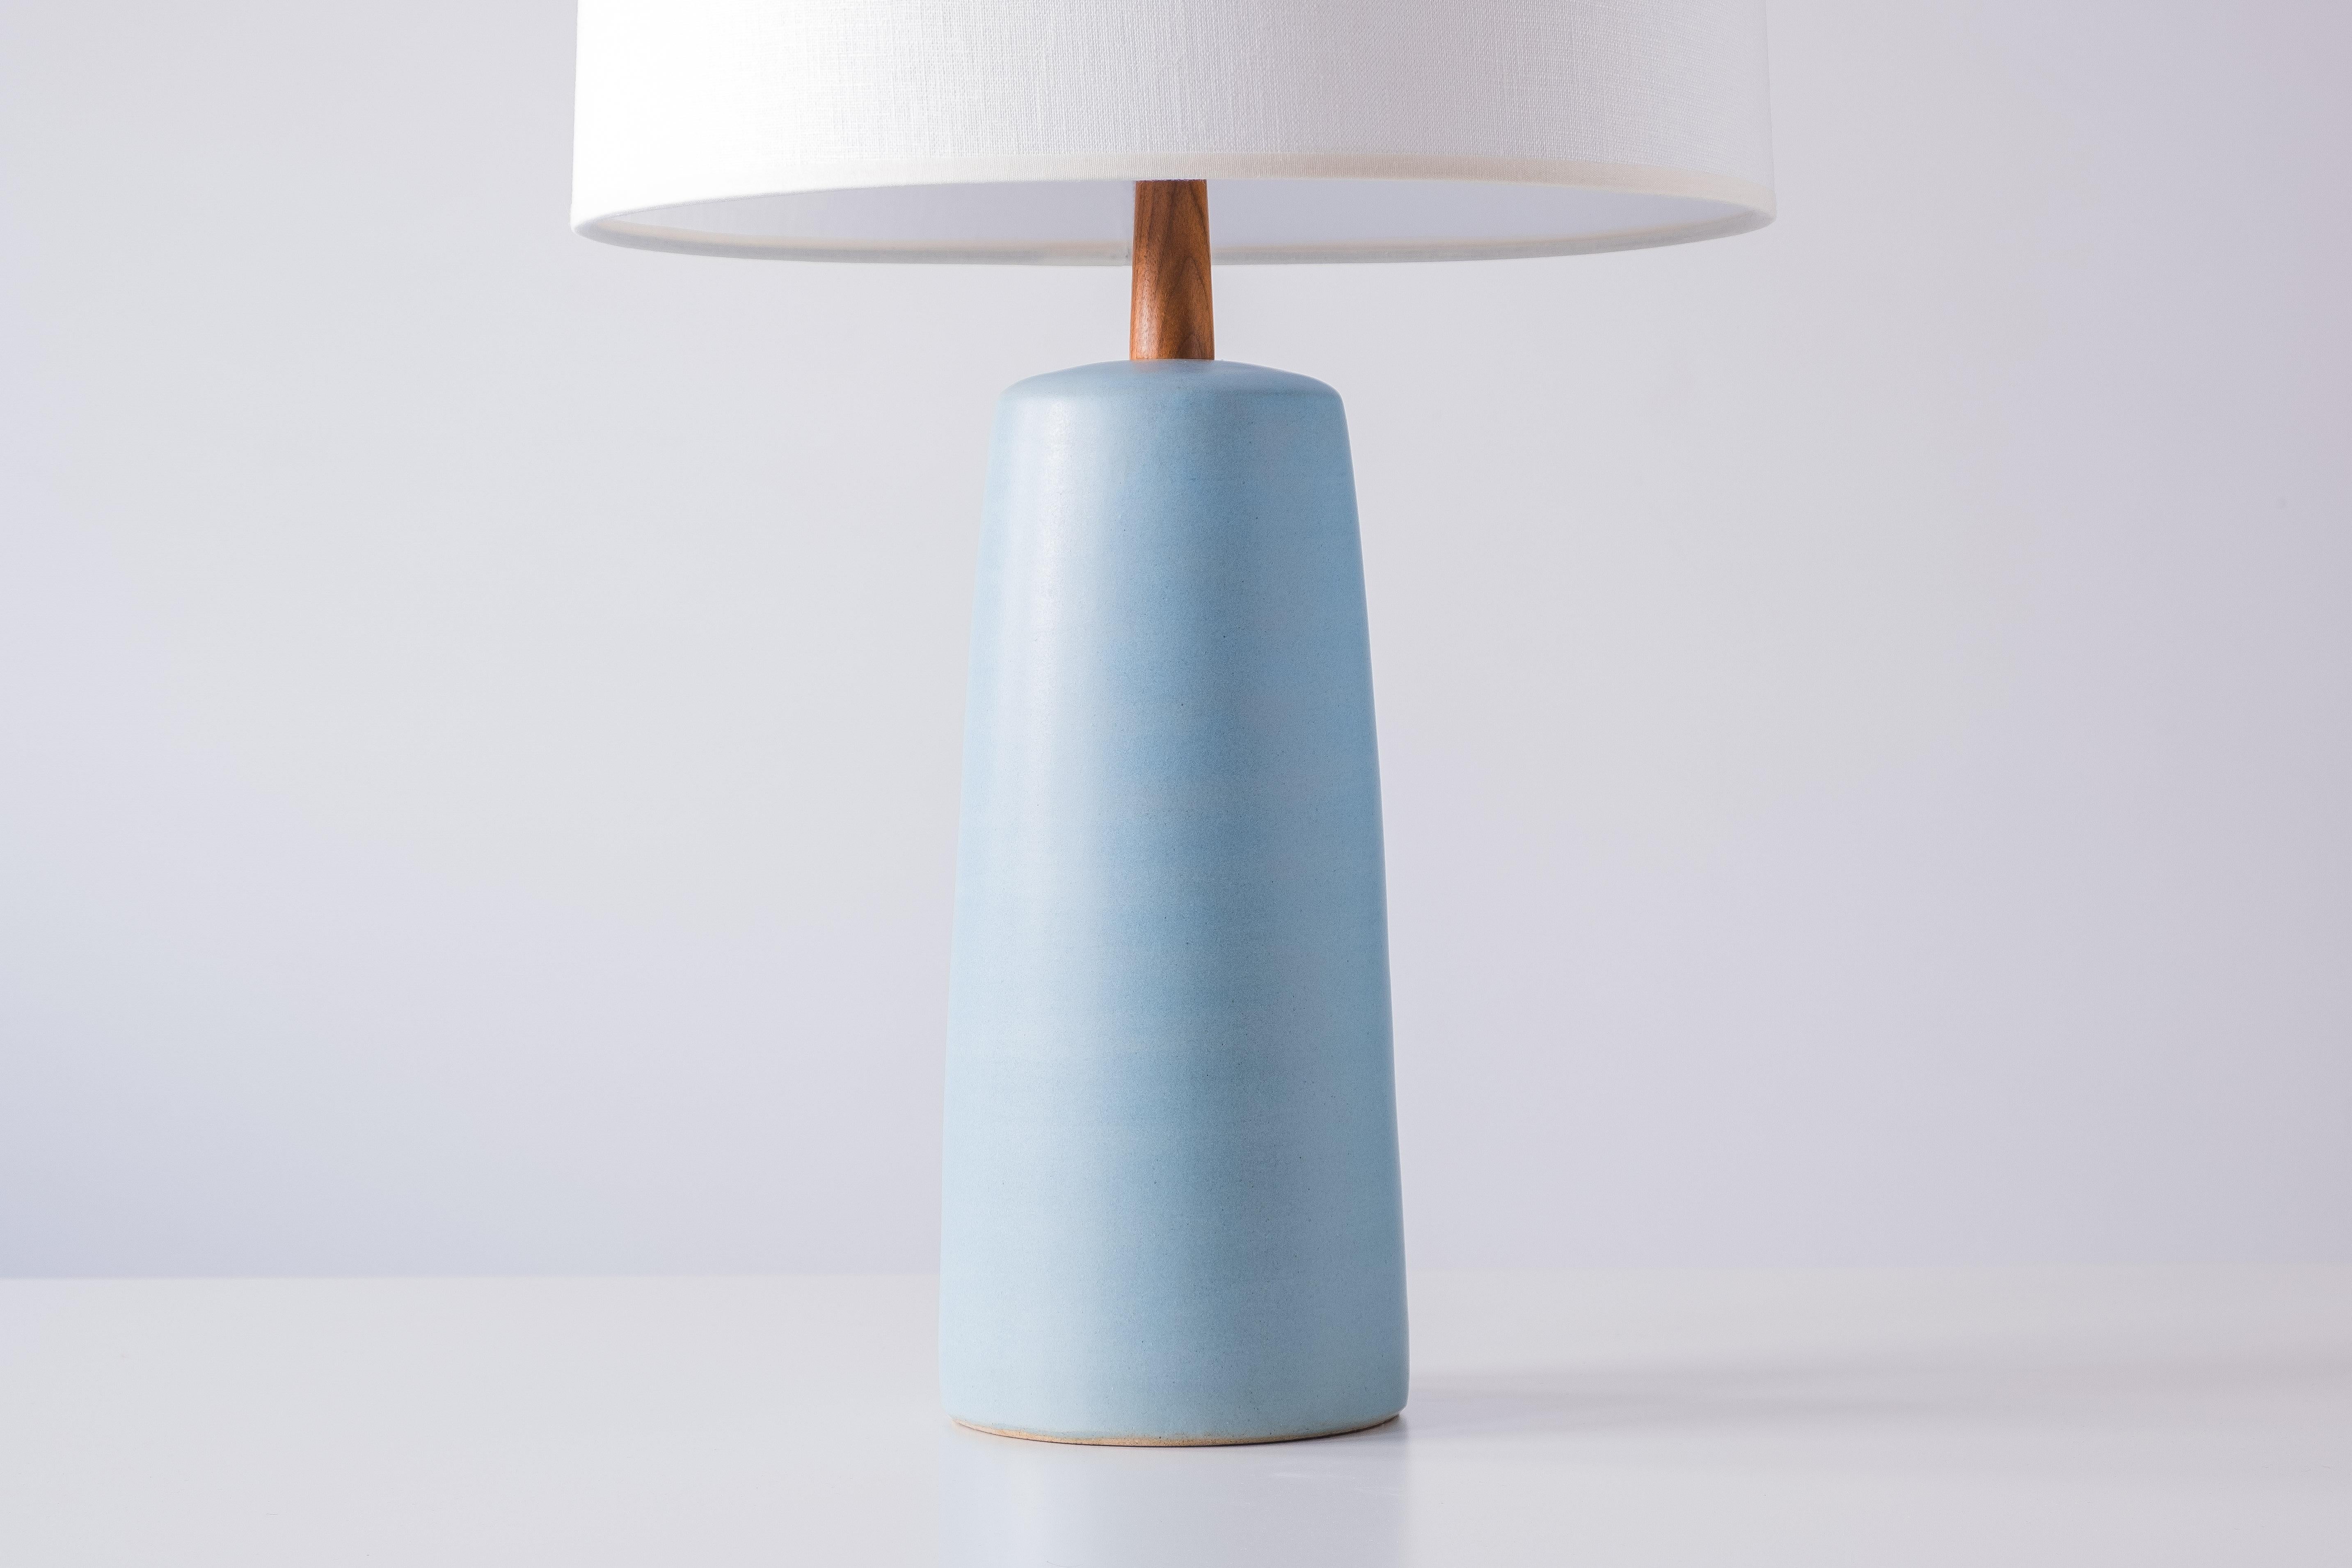 Glazed Gordon & Jane Martz / Marshall Studios Ceramic Table Lamp, Sky Blue